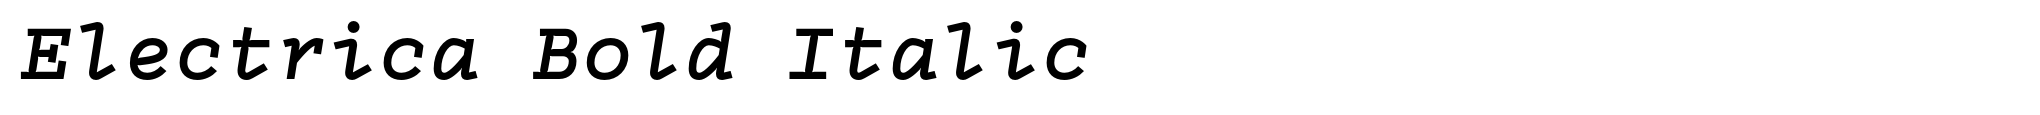 Electrica Bold Italic image